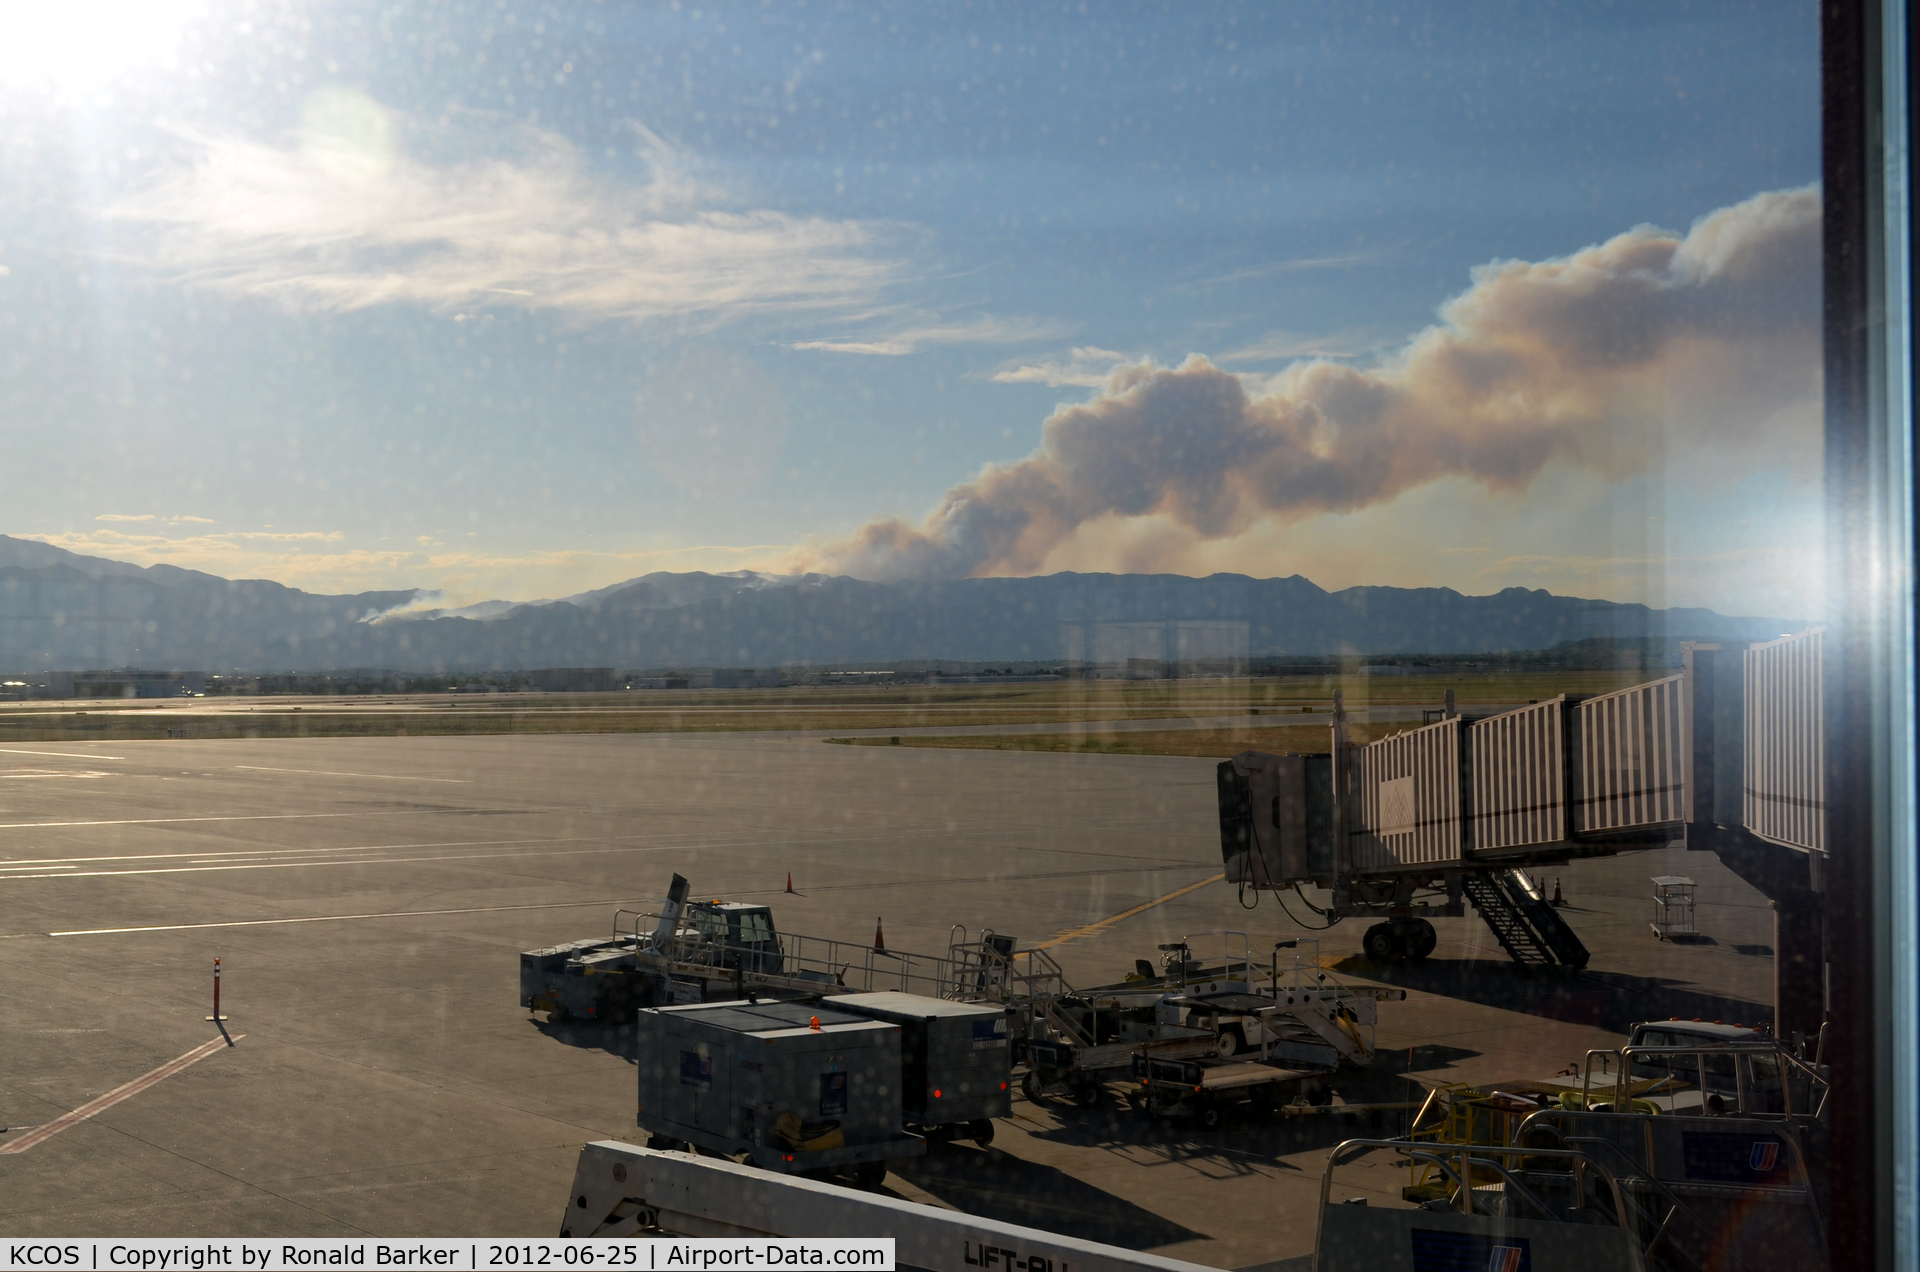 City Of Colorado Springs Municipal Airport (COS) - Waldo canyon fire as seen from COS